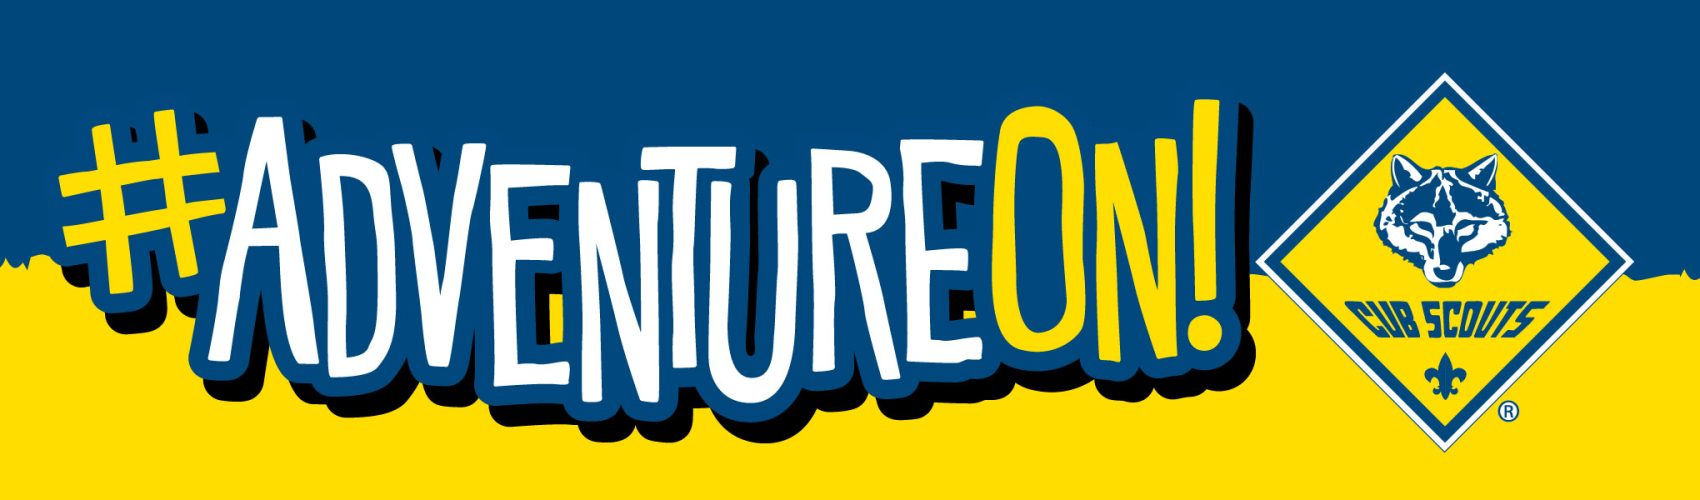 Adventure On 2023 Web Banner - #AdventureOn